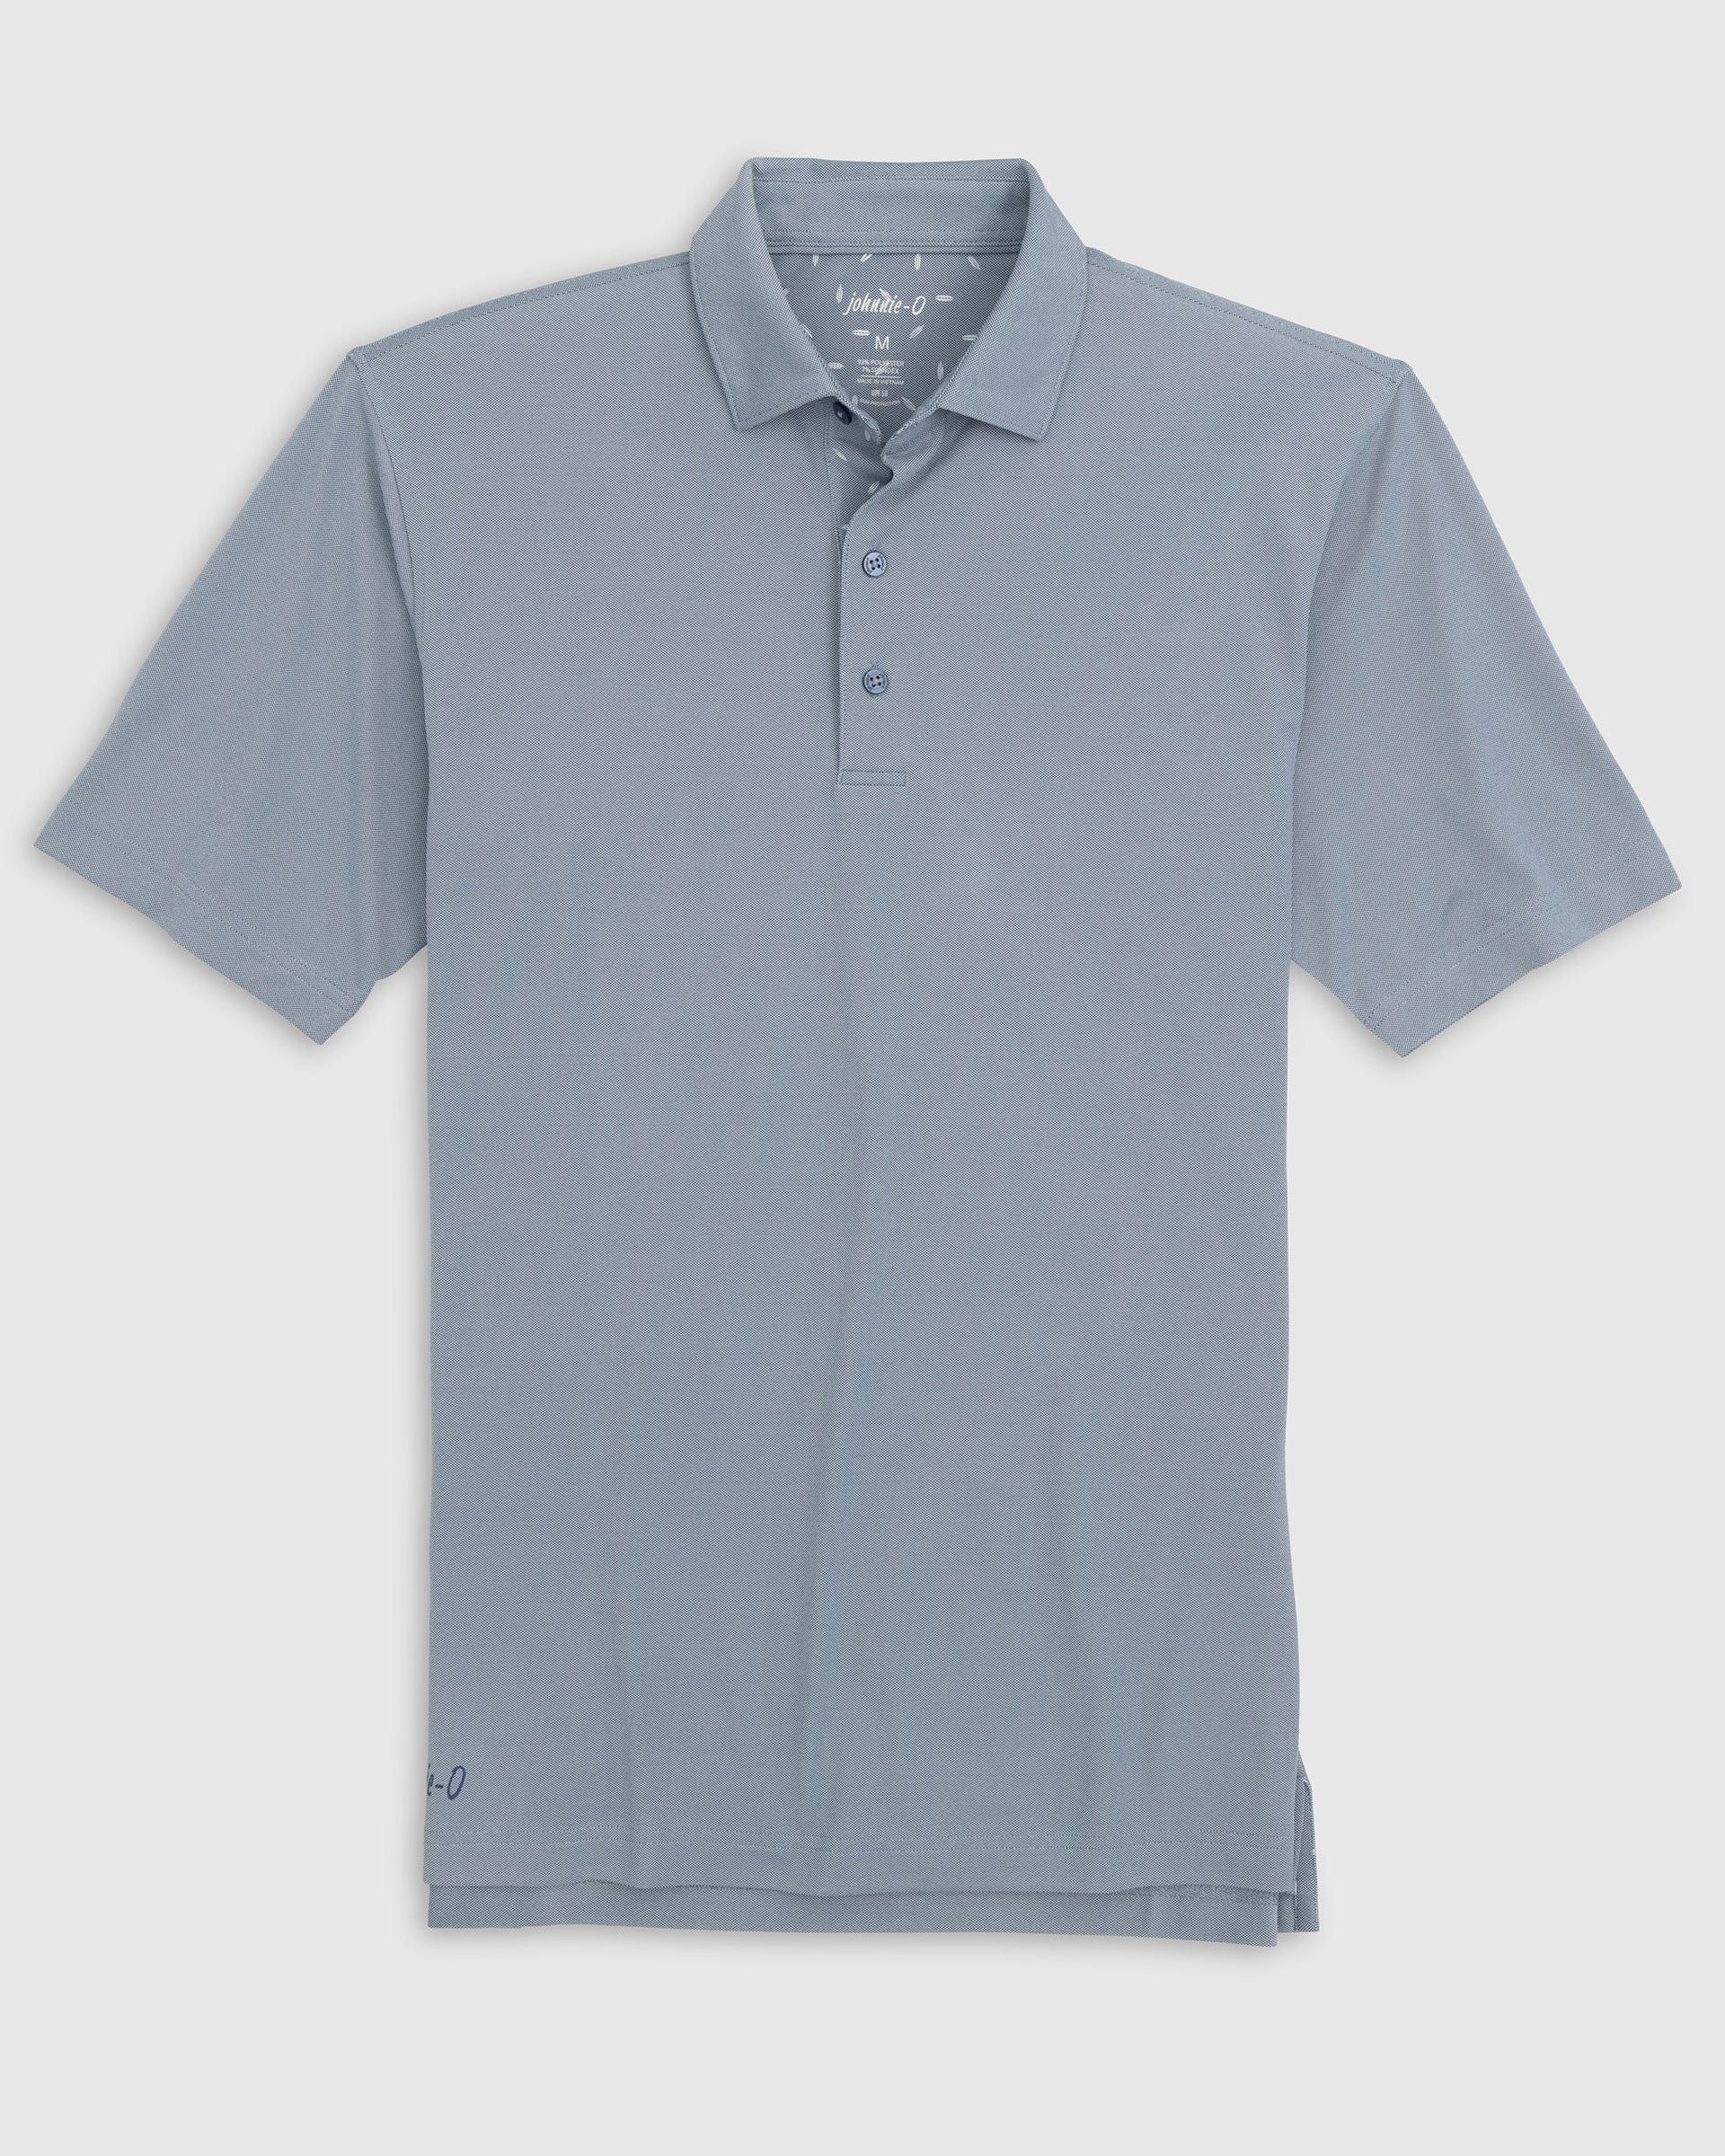 Athletic Streels Polo - Men's Performance Golf Shirts · johnnie-O